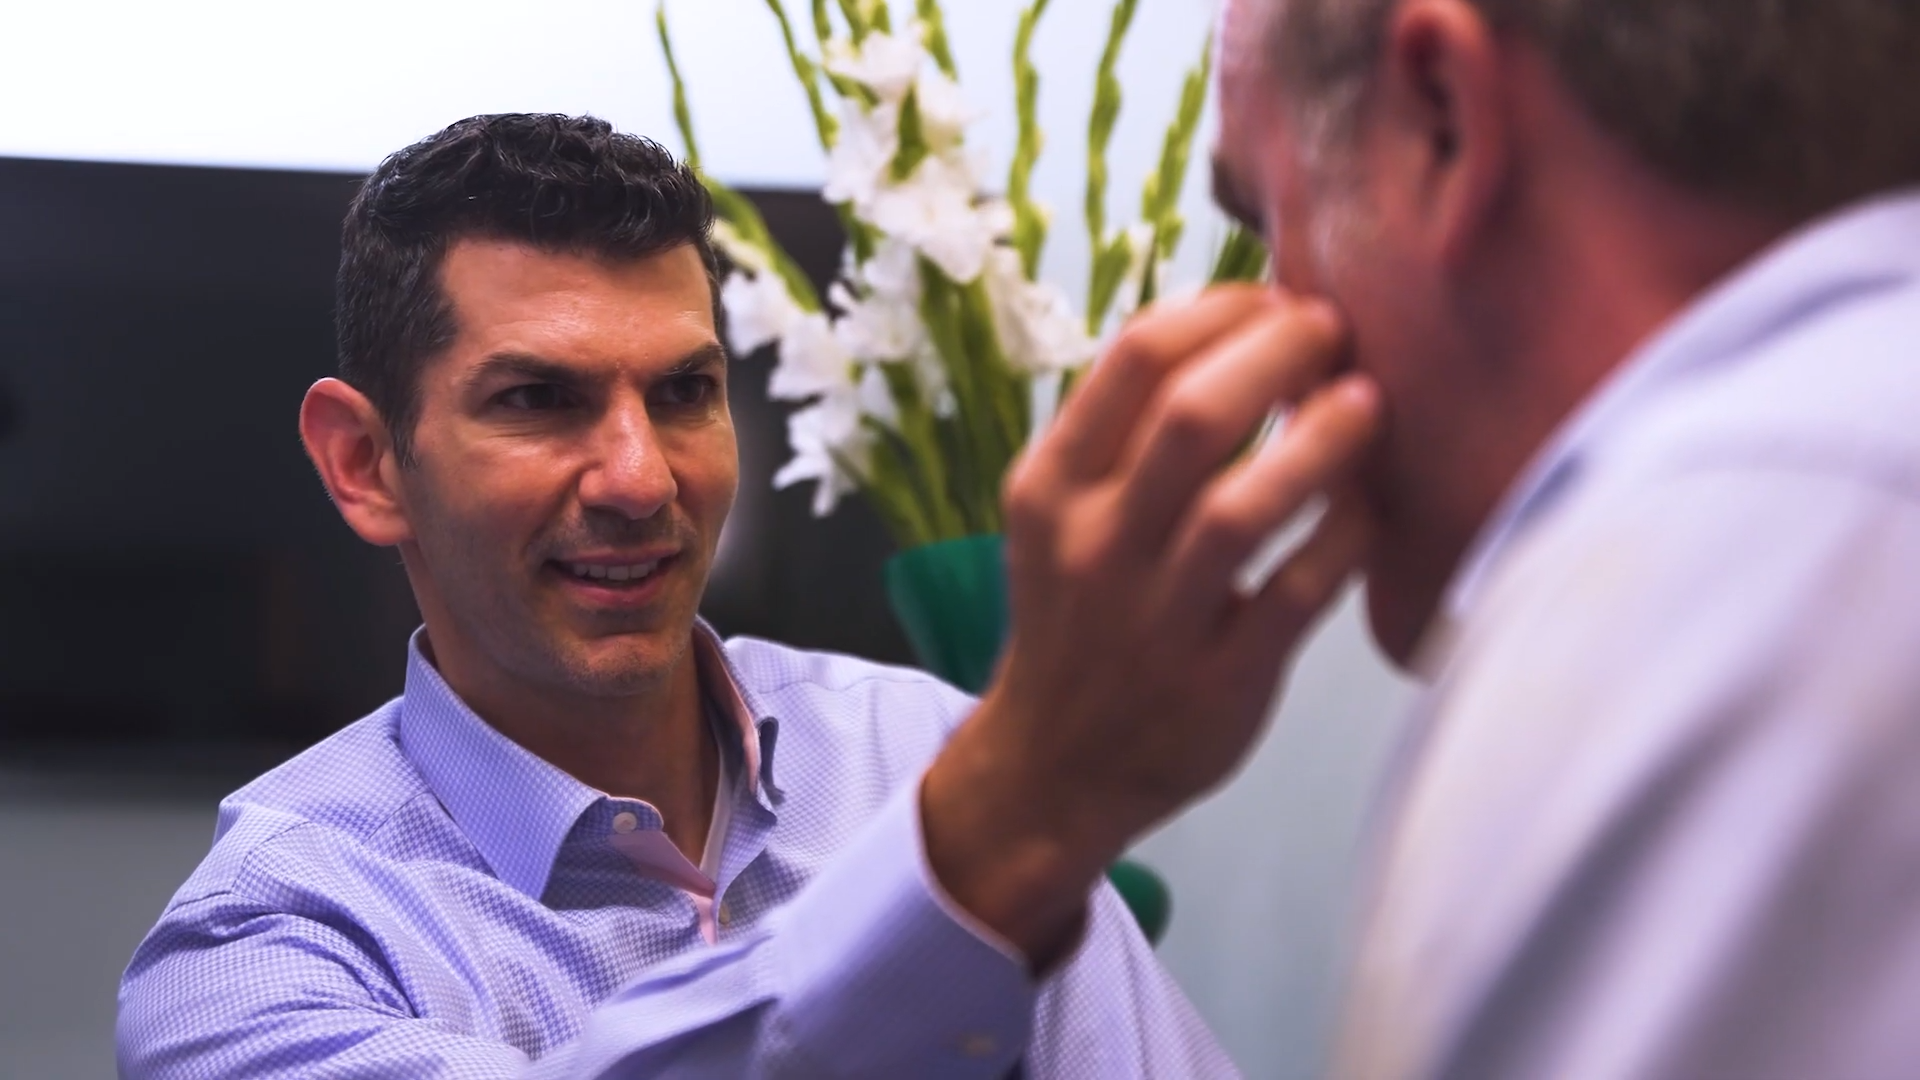 Dr. Cappuccino giving a patient a facial consultation